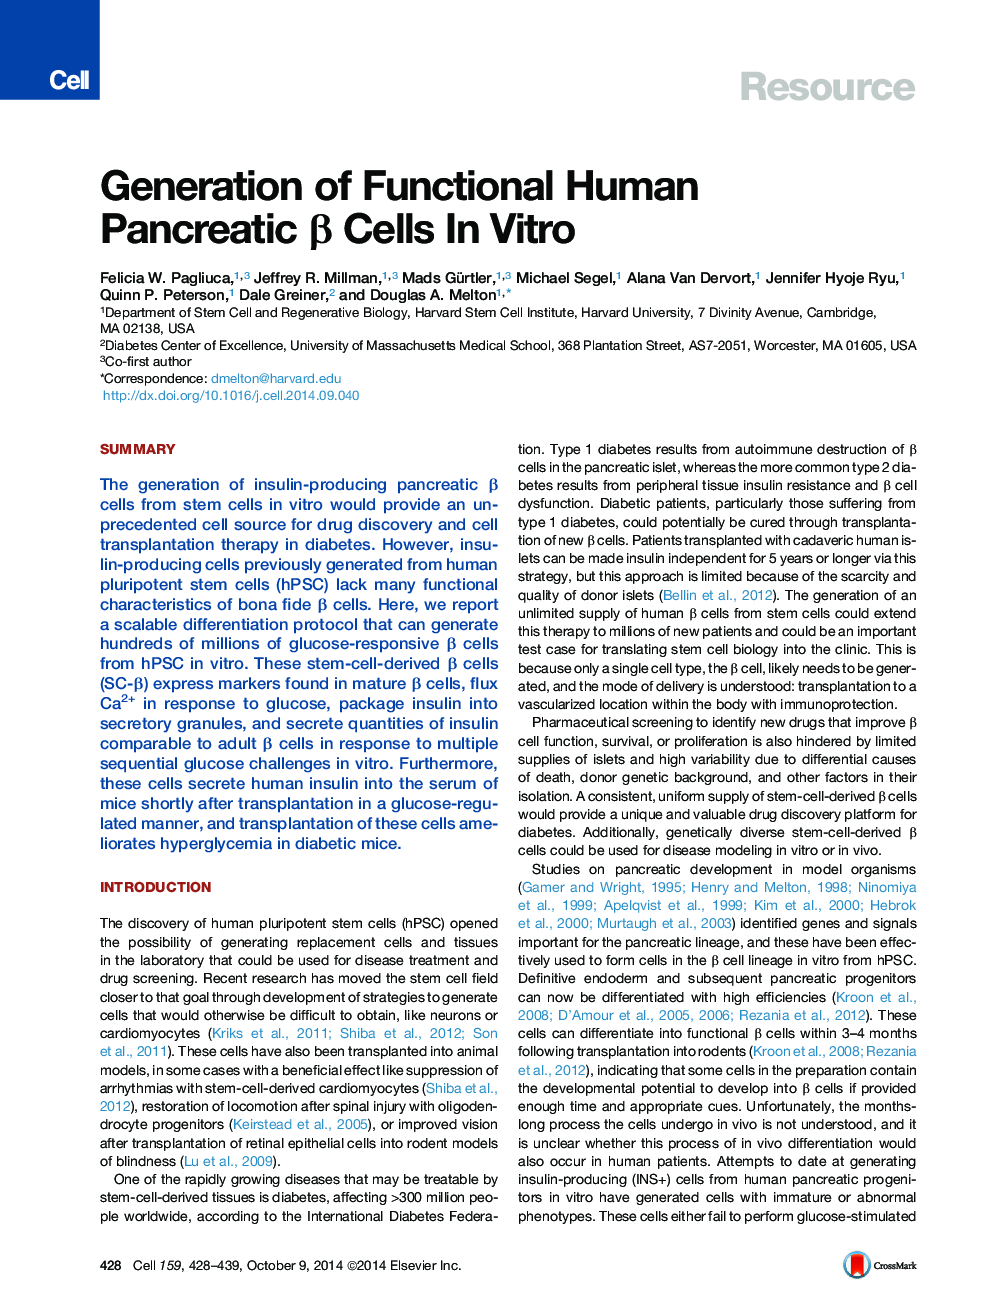 Generation of Functional Human Pancreatic β Cells In Vitro